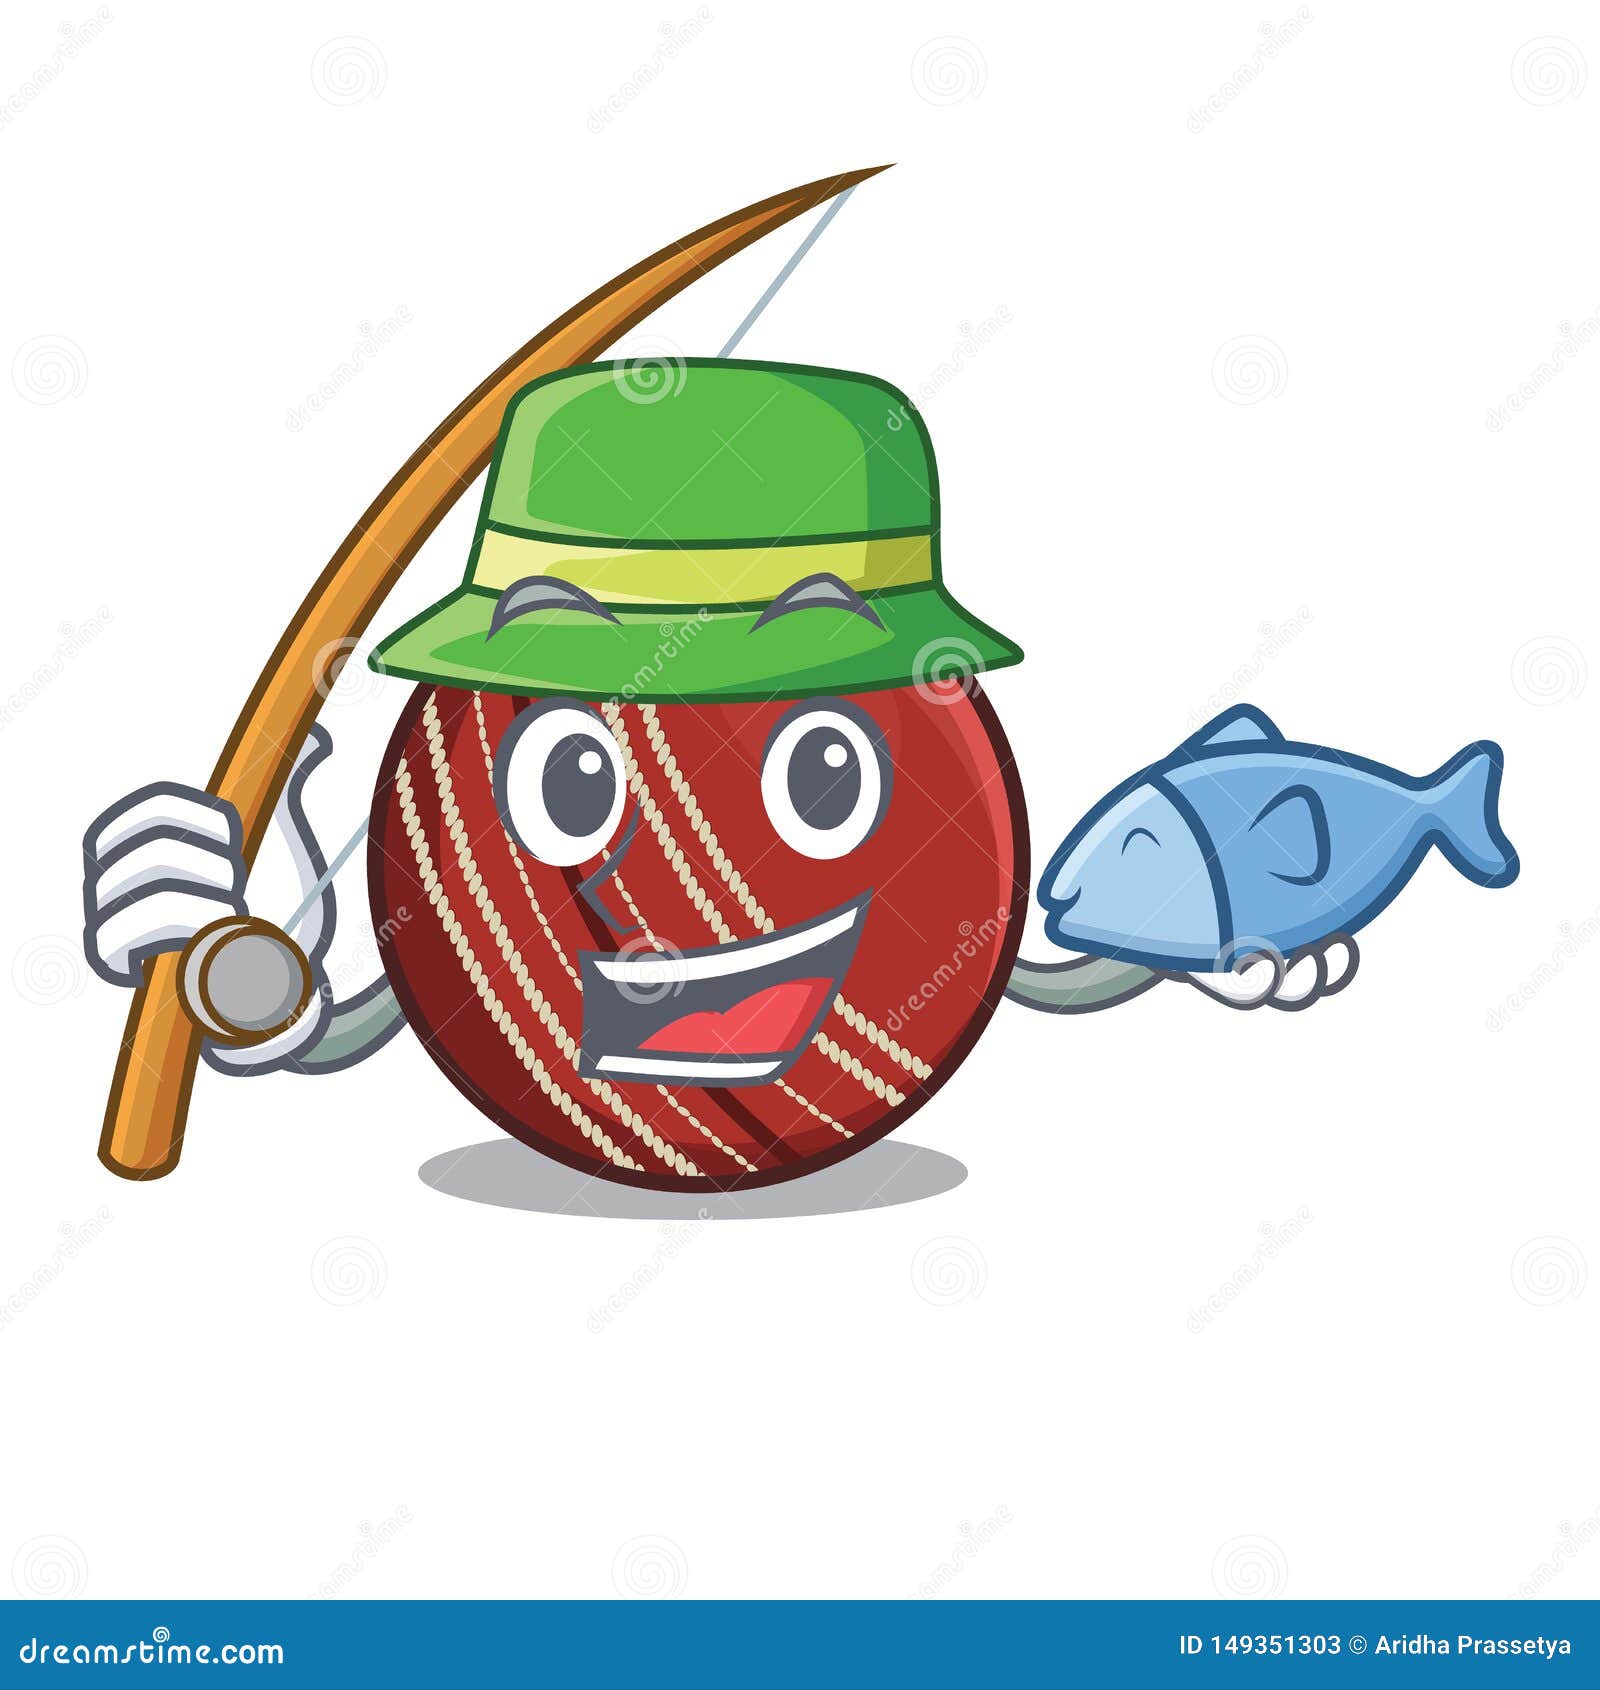 Fishing Cricket Ball in the Cartoon Shape Stock Vector